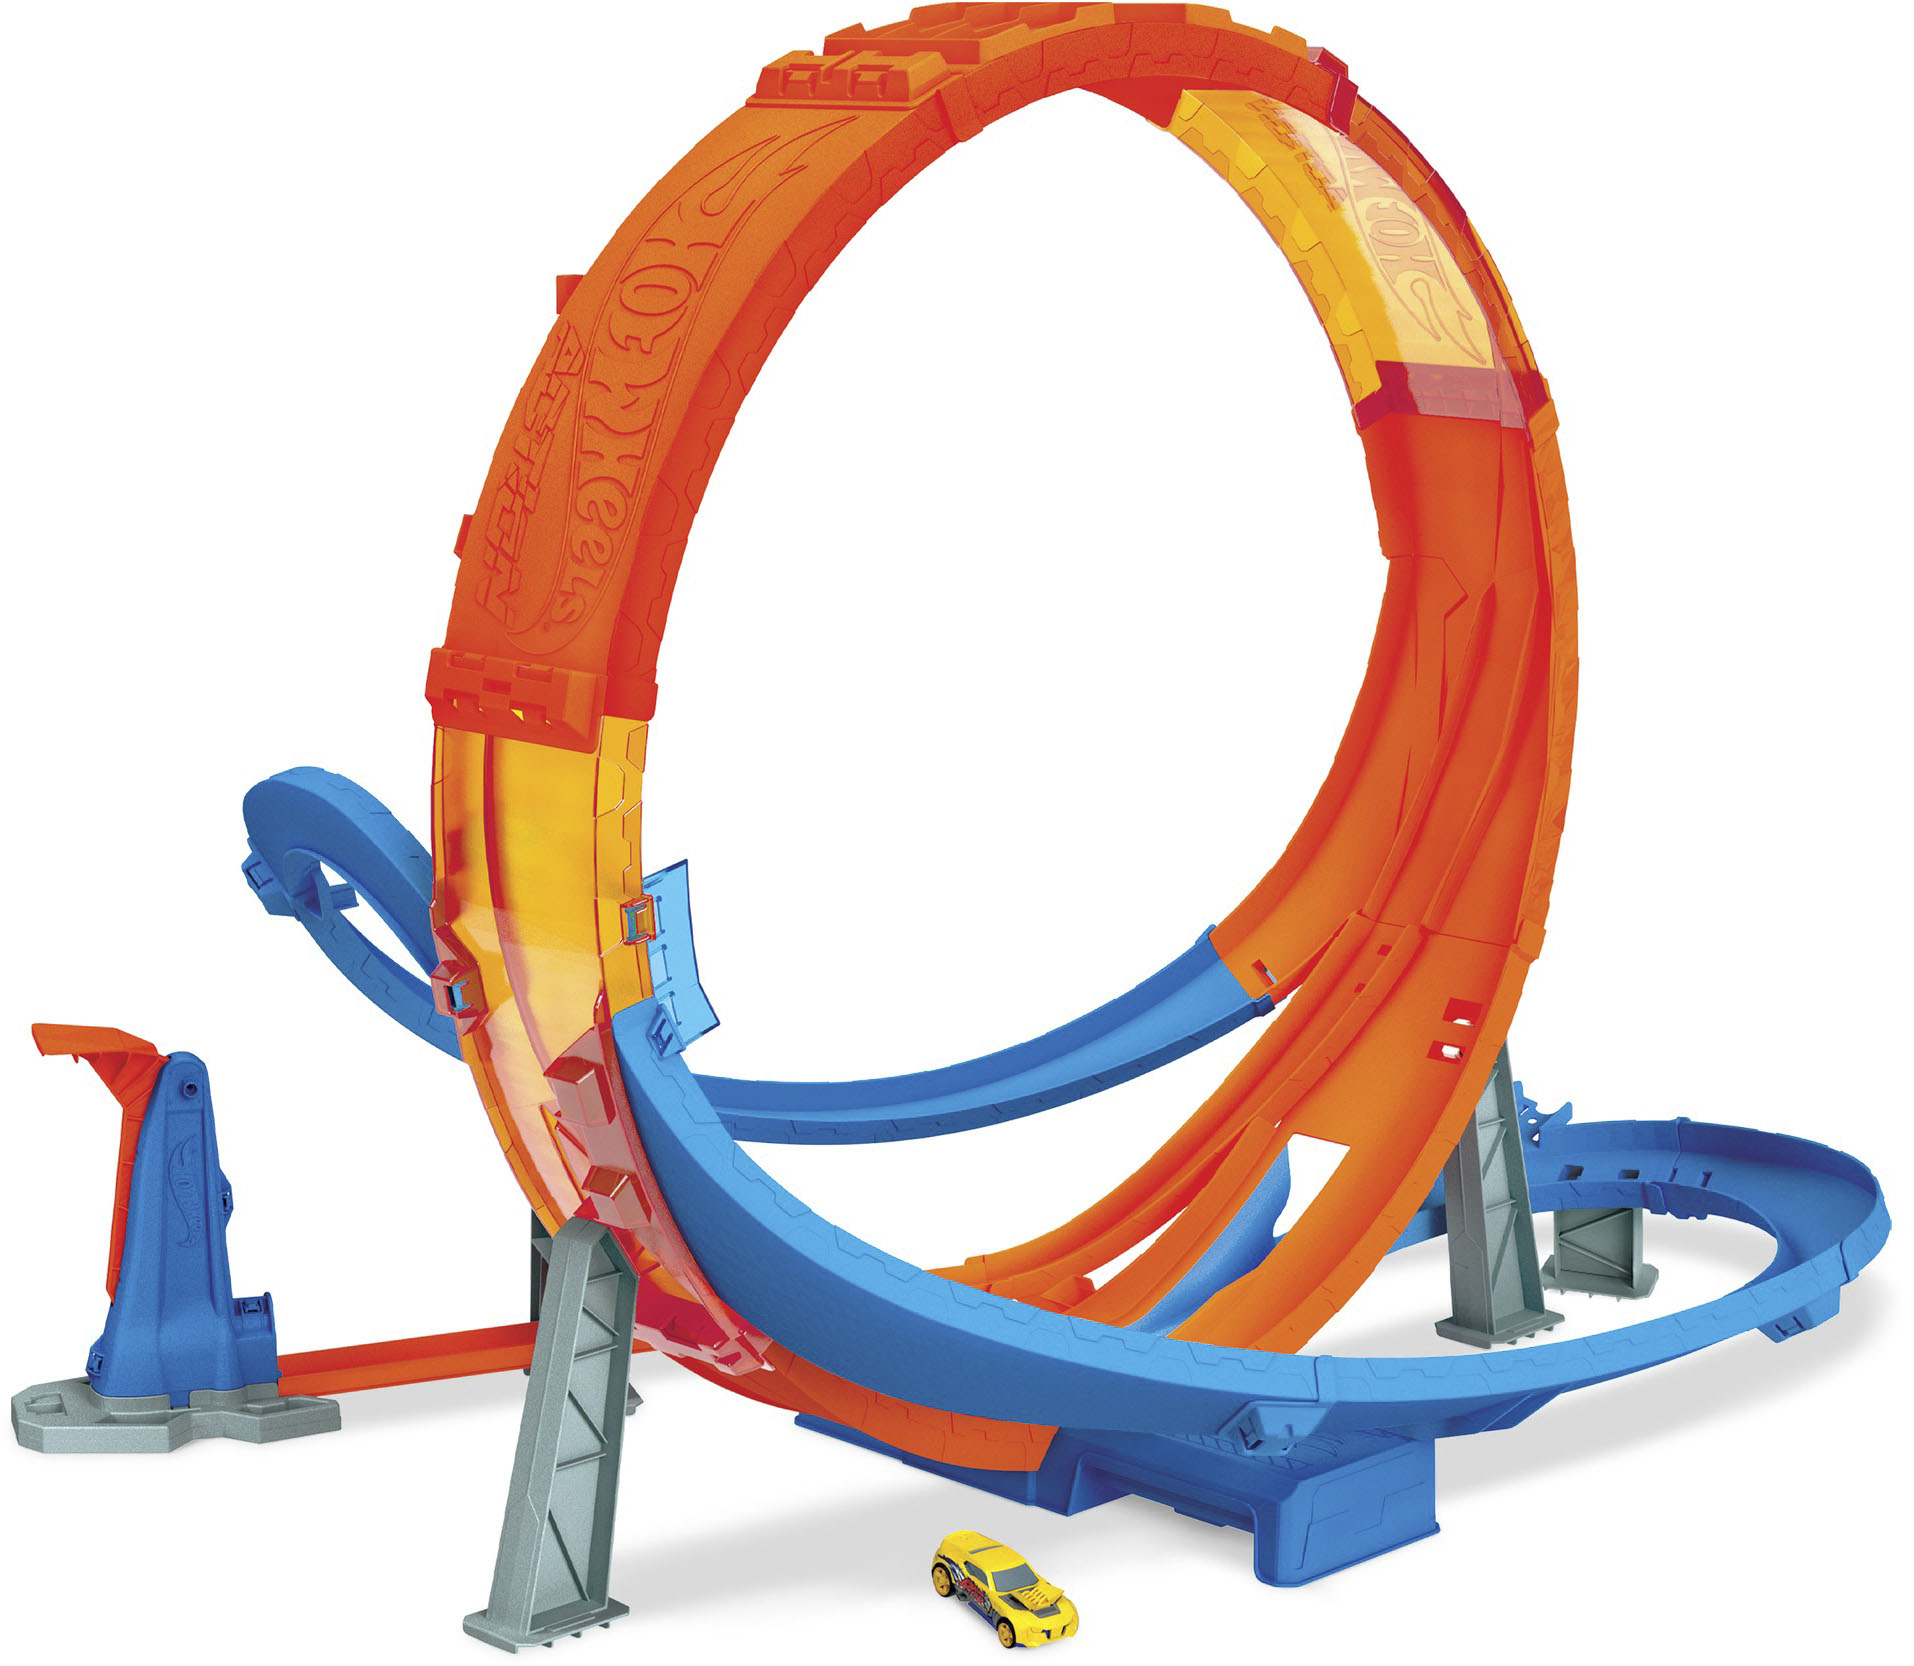 Angle View: Hot Wheels - Action Massive Loop Mayhem - Blue/Orange